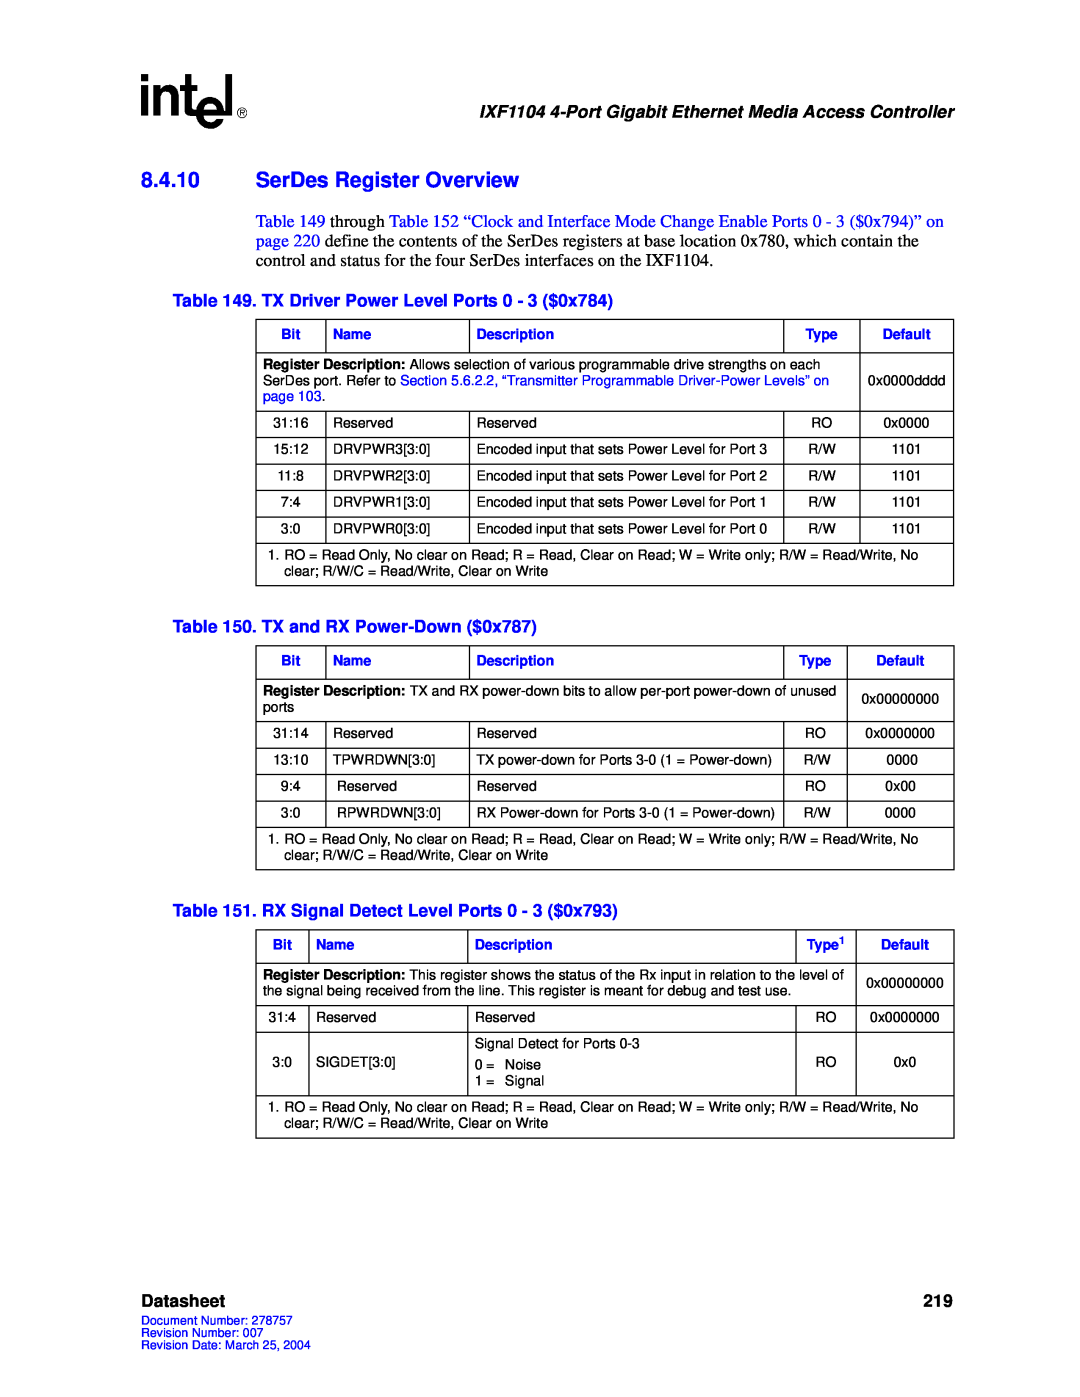 Intel IXF1104 manual 8.4.10SerDes Register Overview, Datasheet 